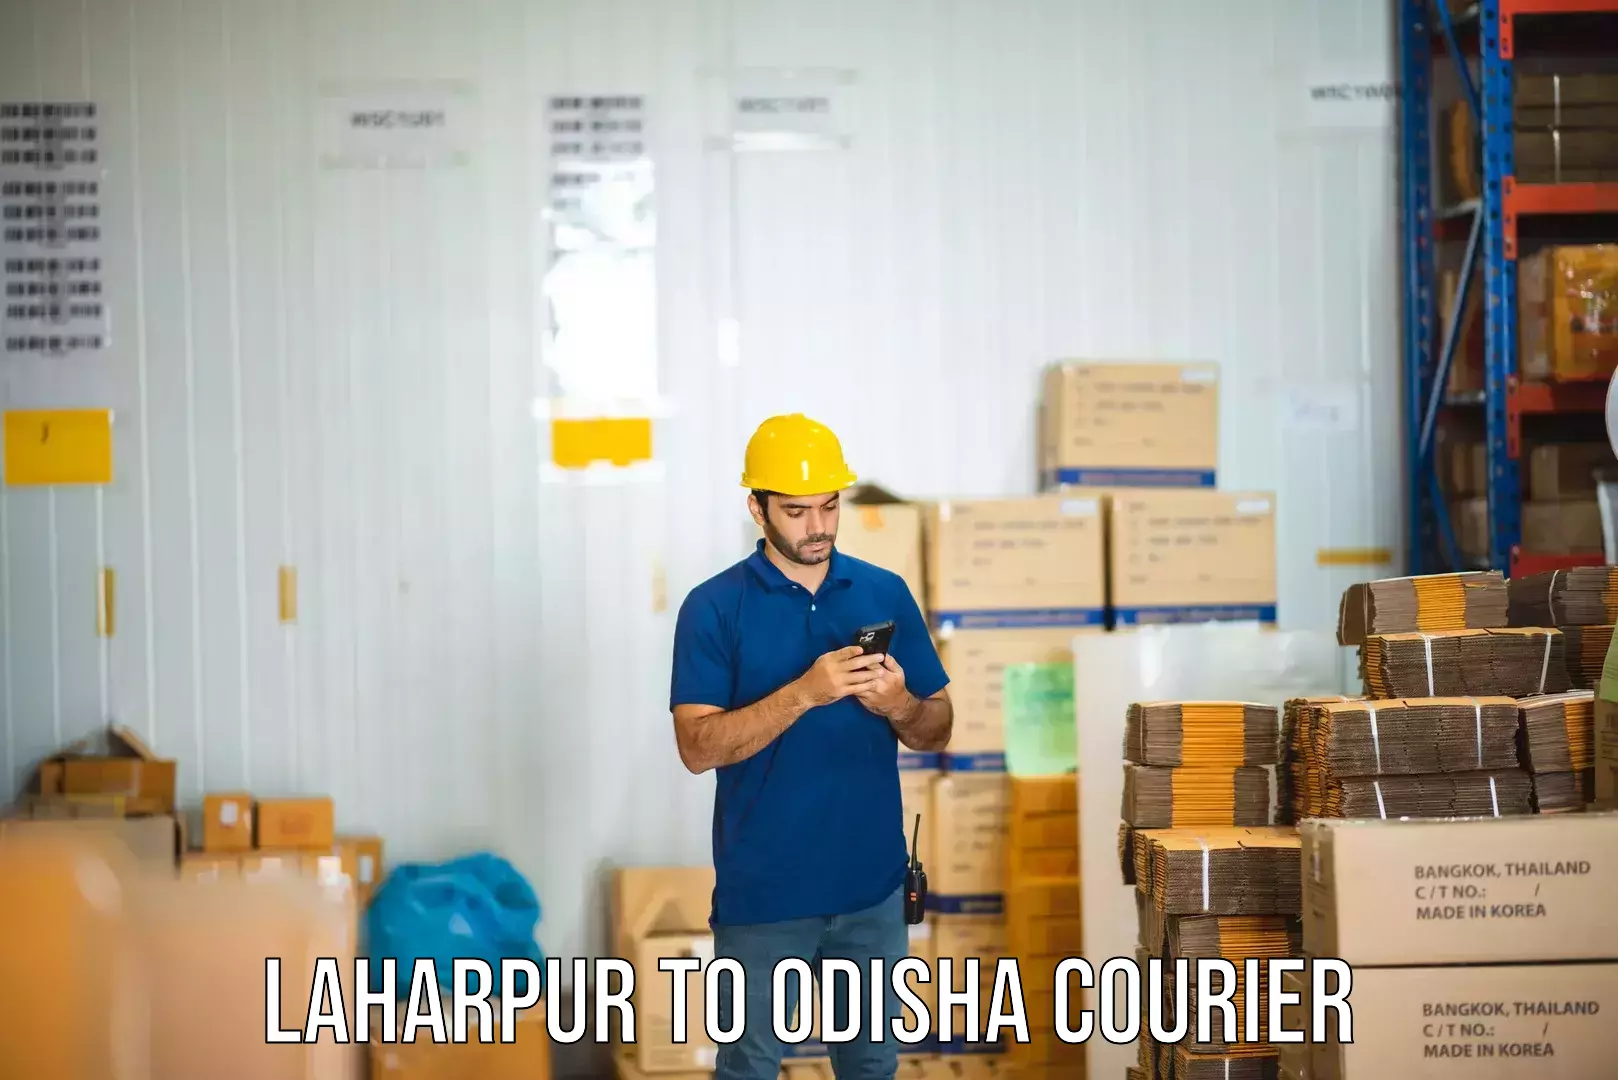 Business shipping needs Laharpur to Asika